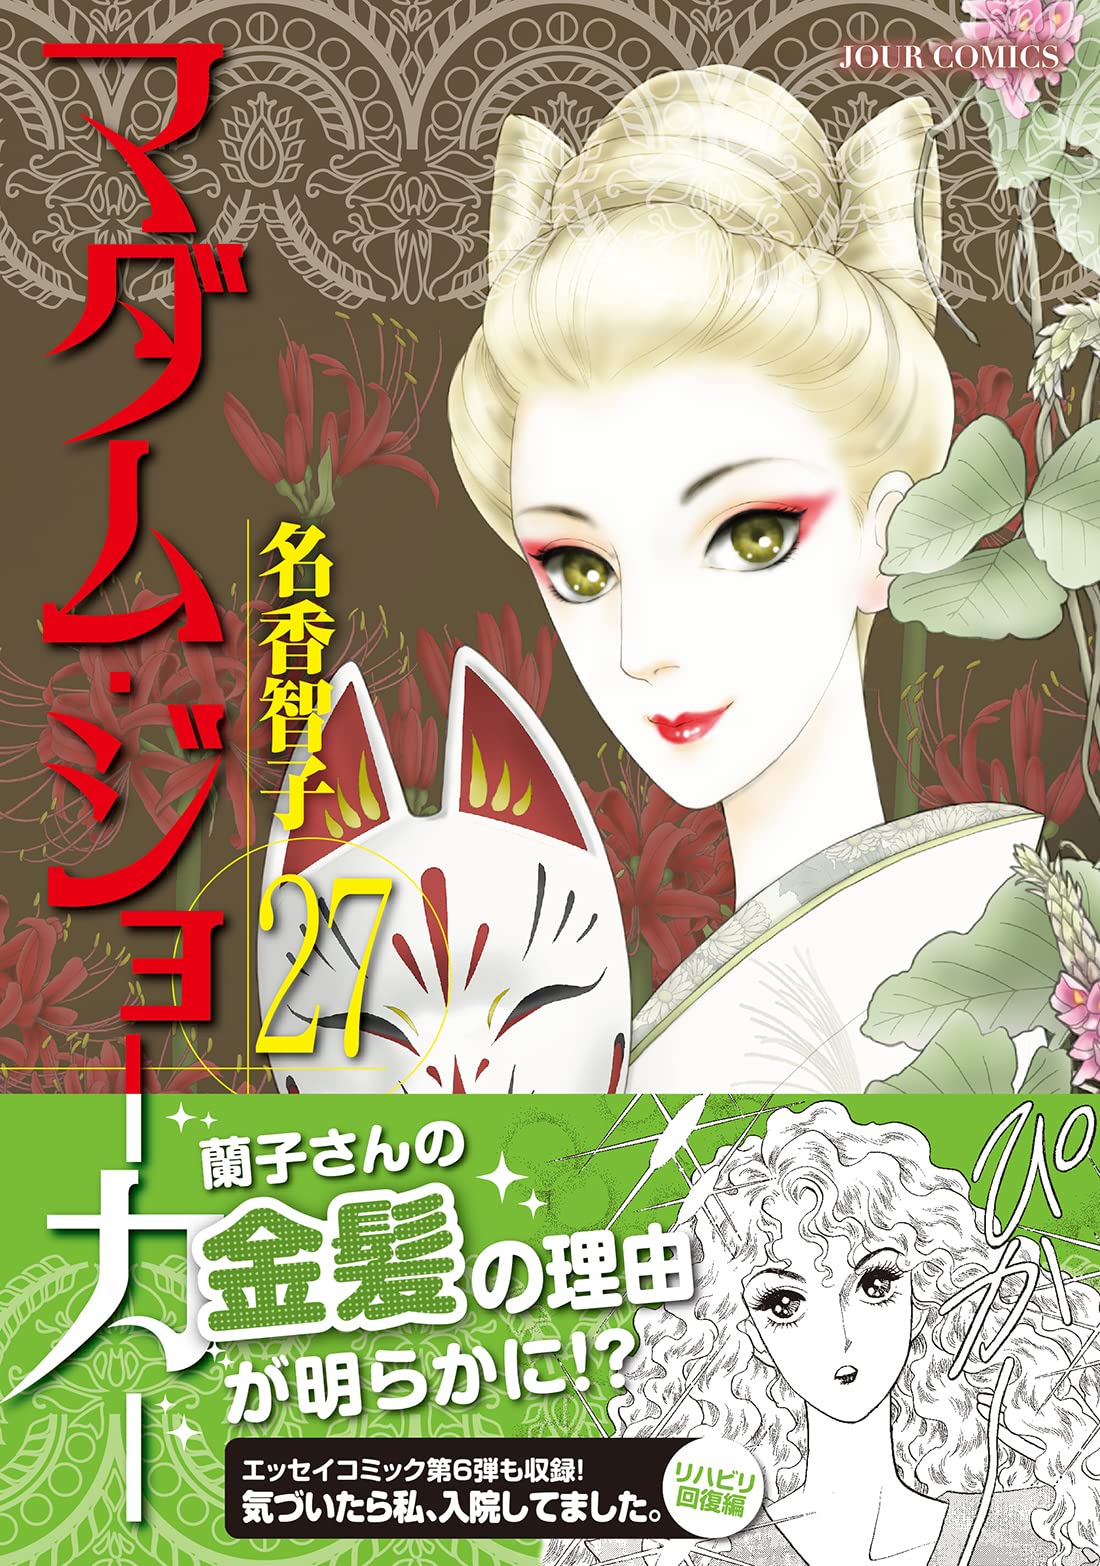 Madame Joker 27 – Japanese Book Store